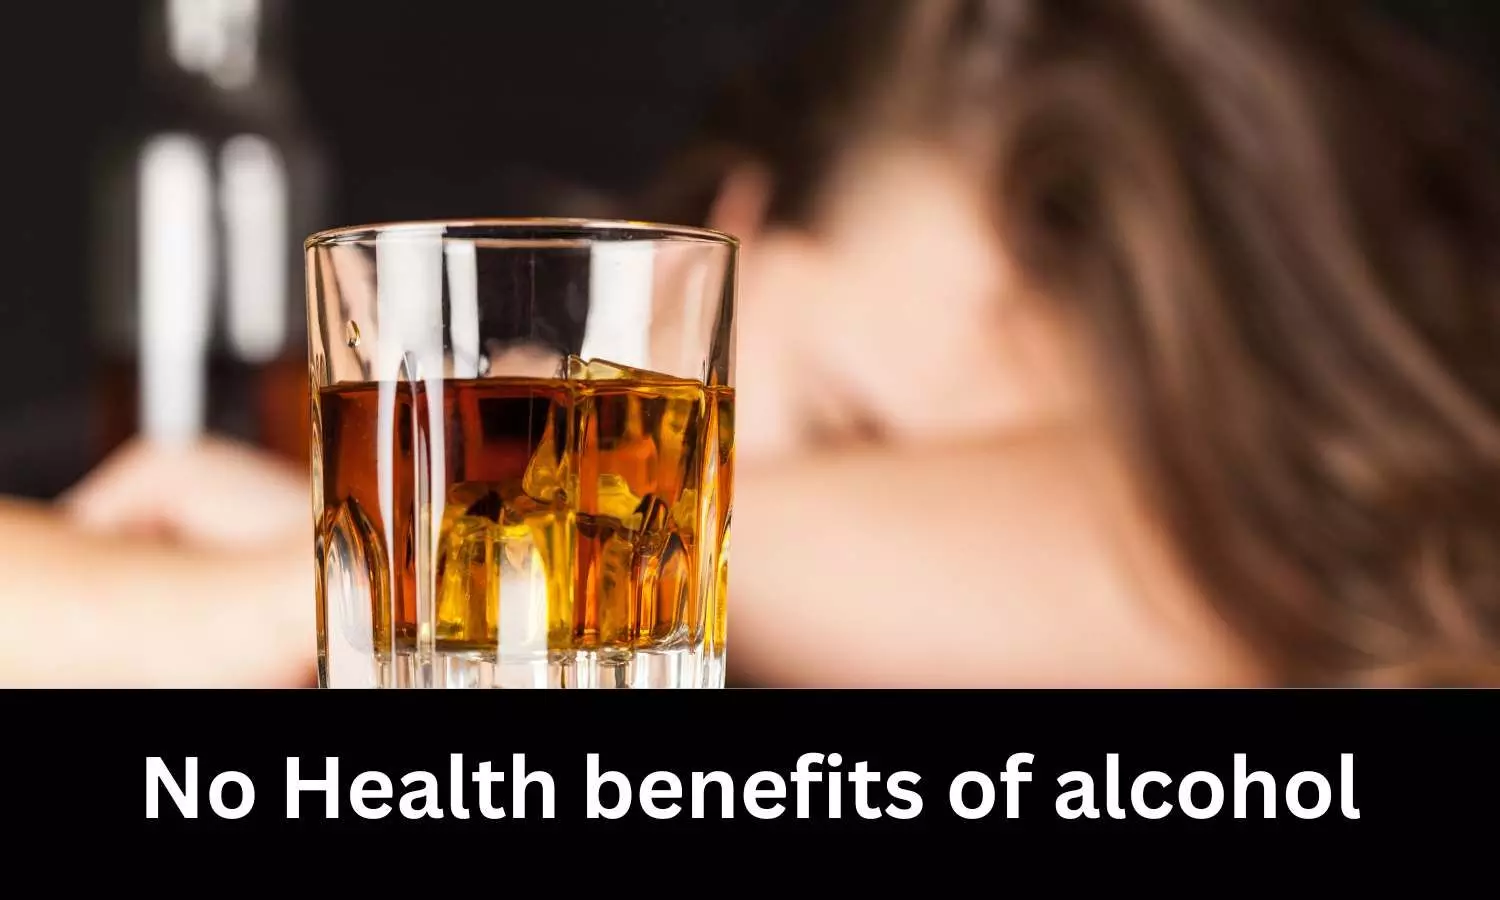 No health benefits of alcohol